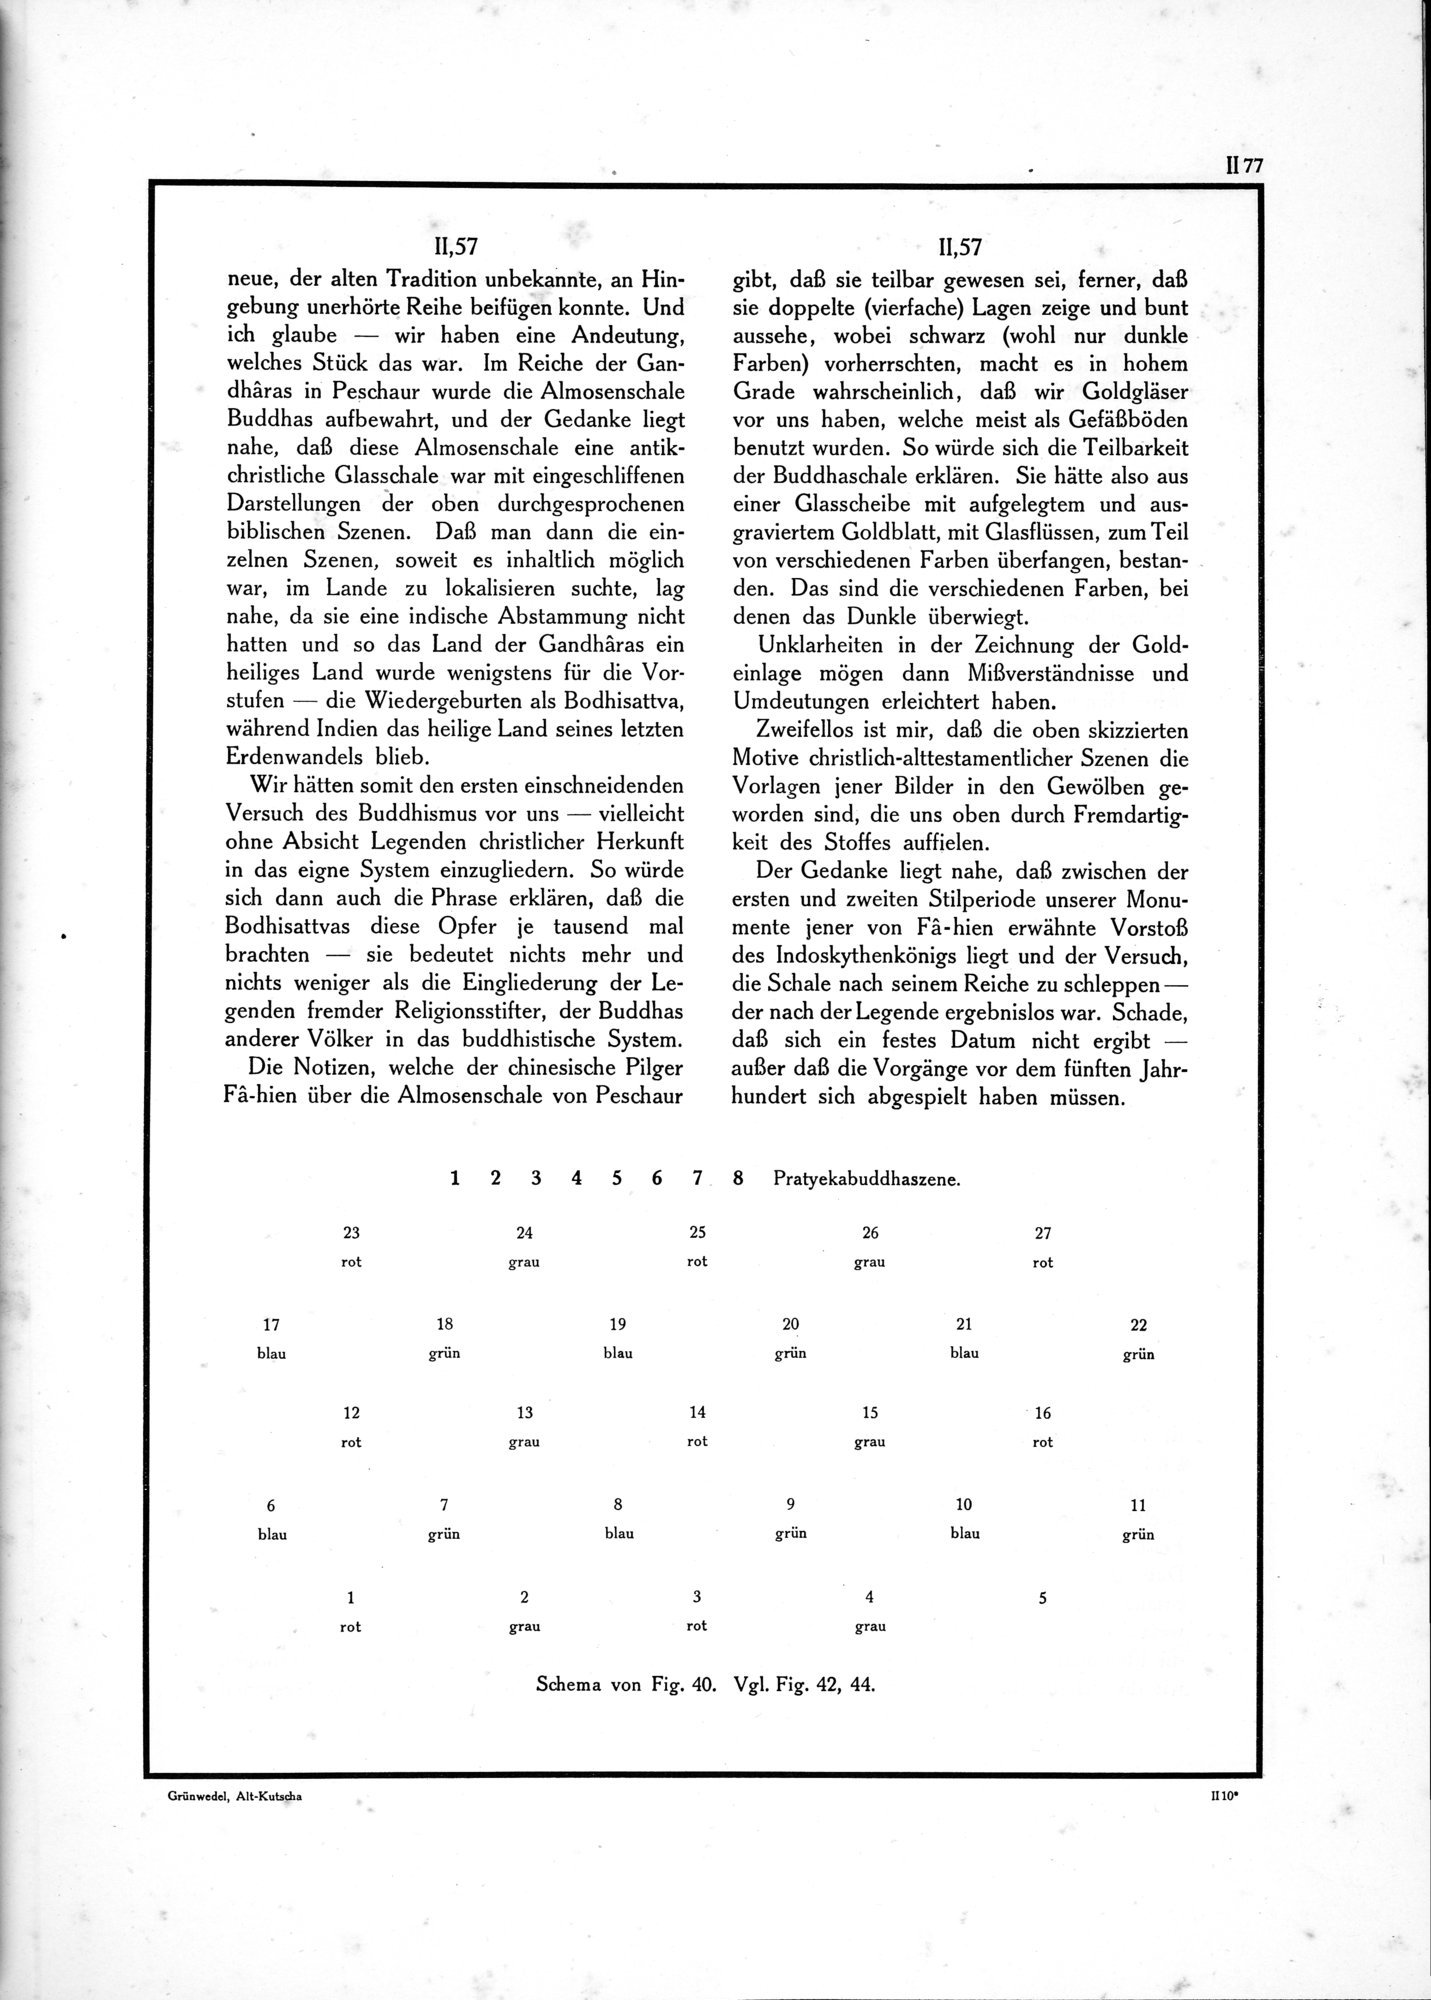 Alt-Kutscha : vol.1 / Page 191 (Grayscale High Resolution Image)